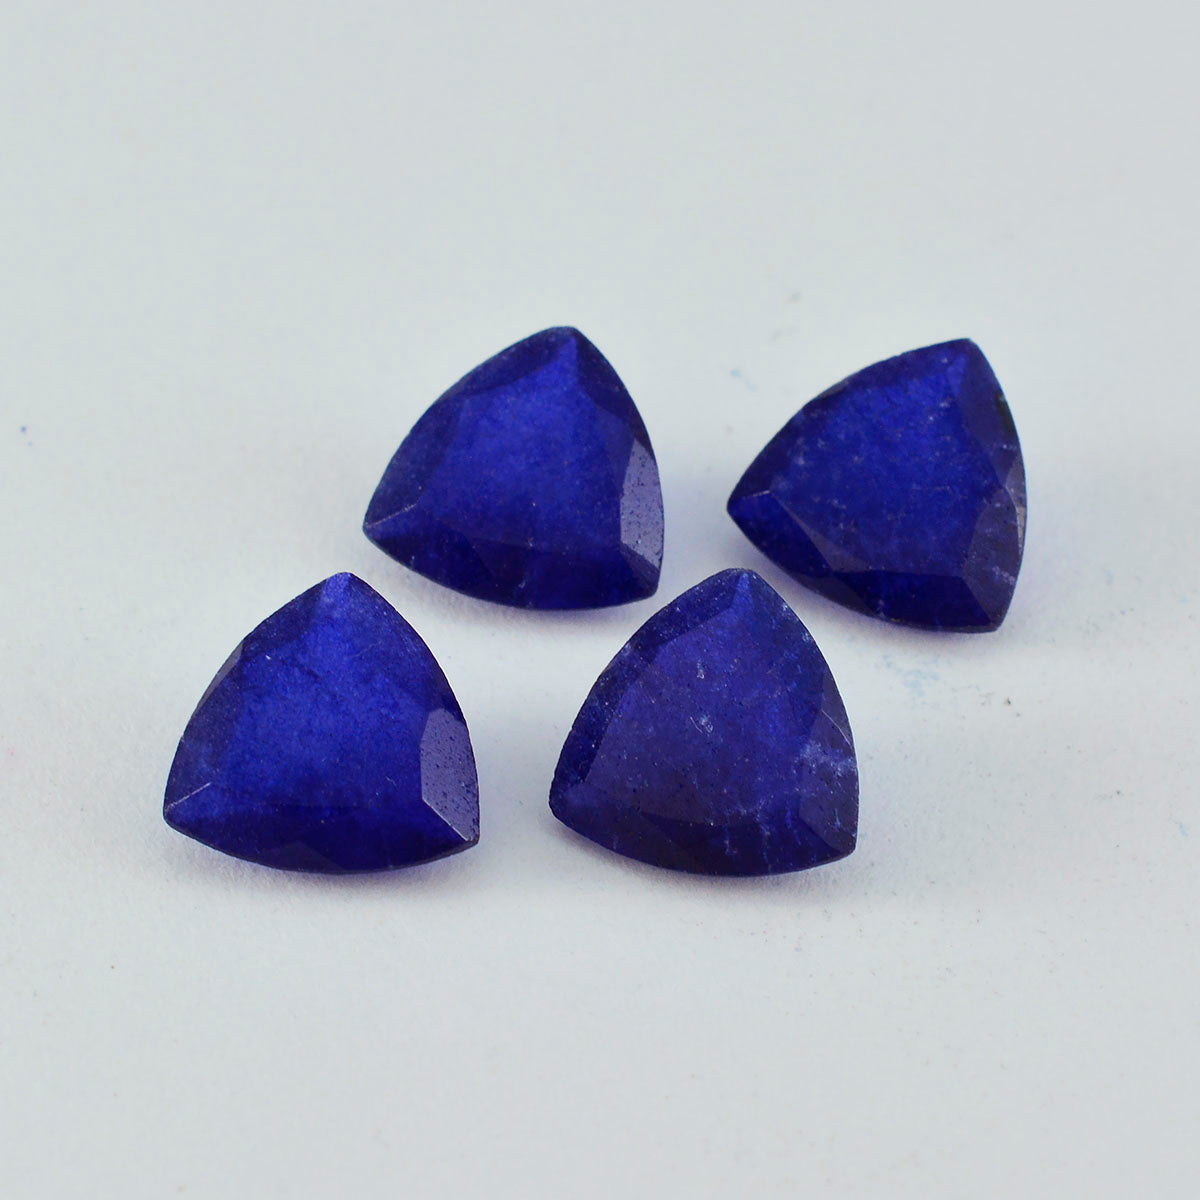 riyogems 1pc リアル ブルー ジャスパー ファセット 10x10 mm 兆形状の素晴らしい品質の宝石